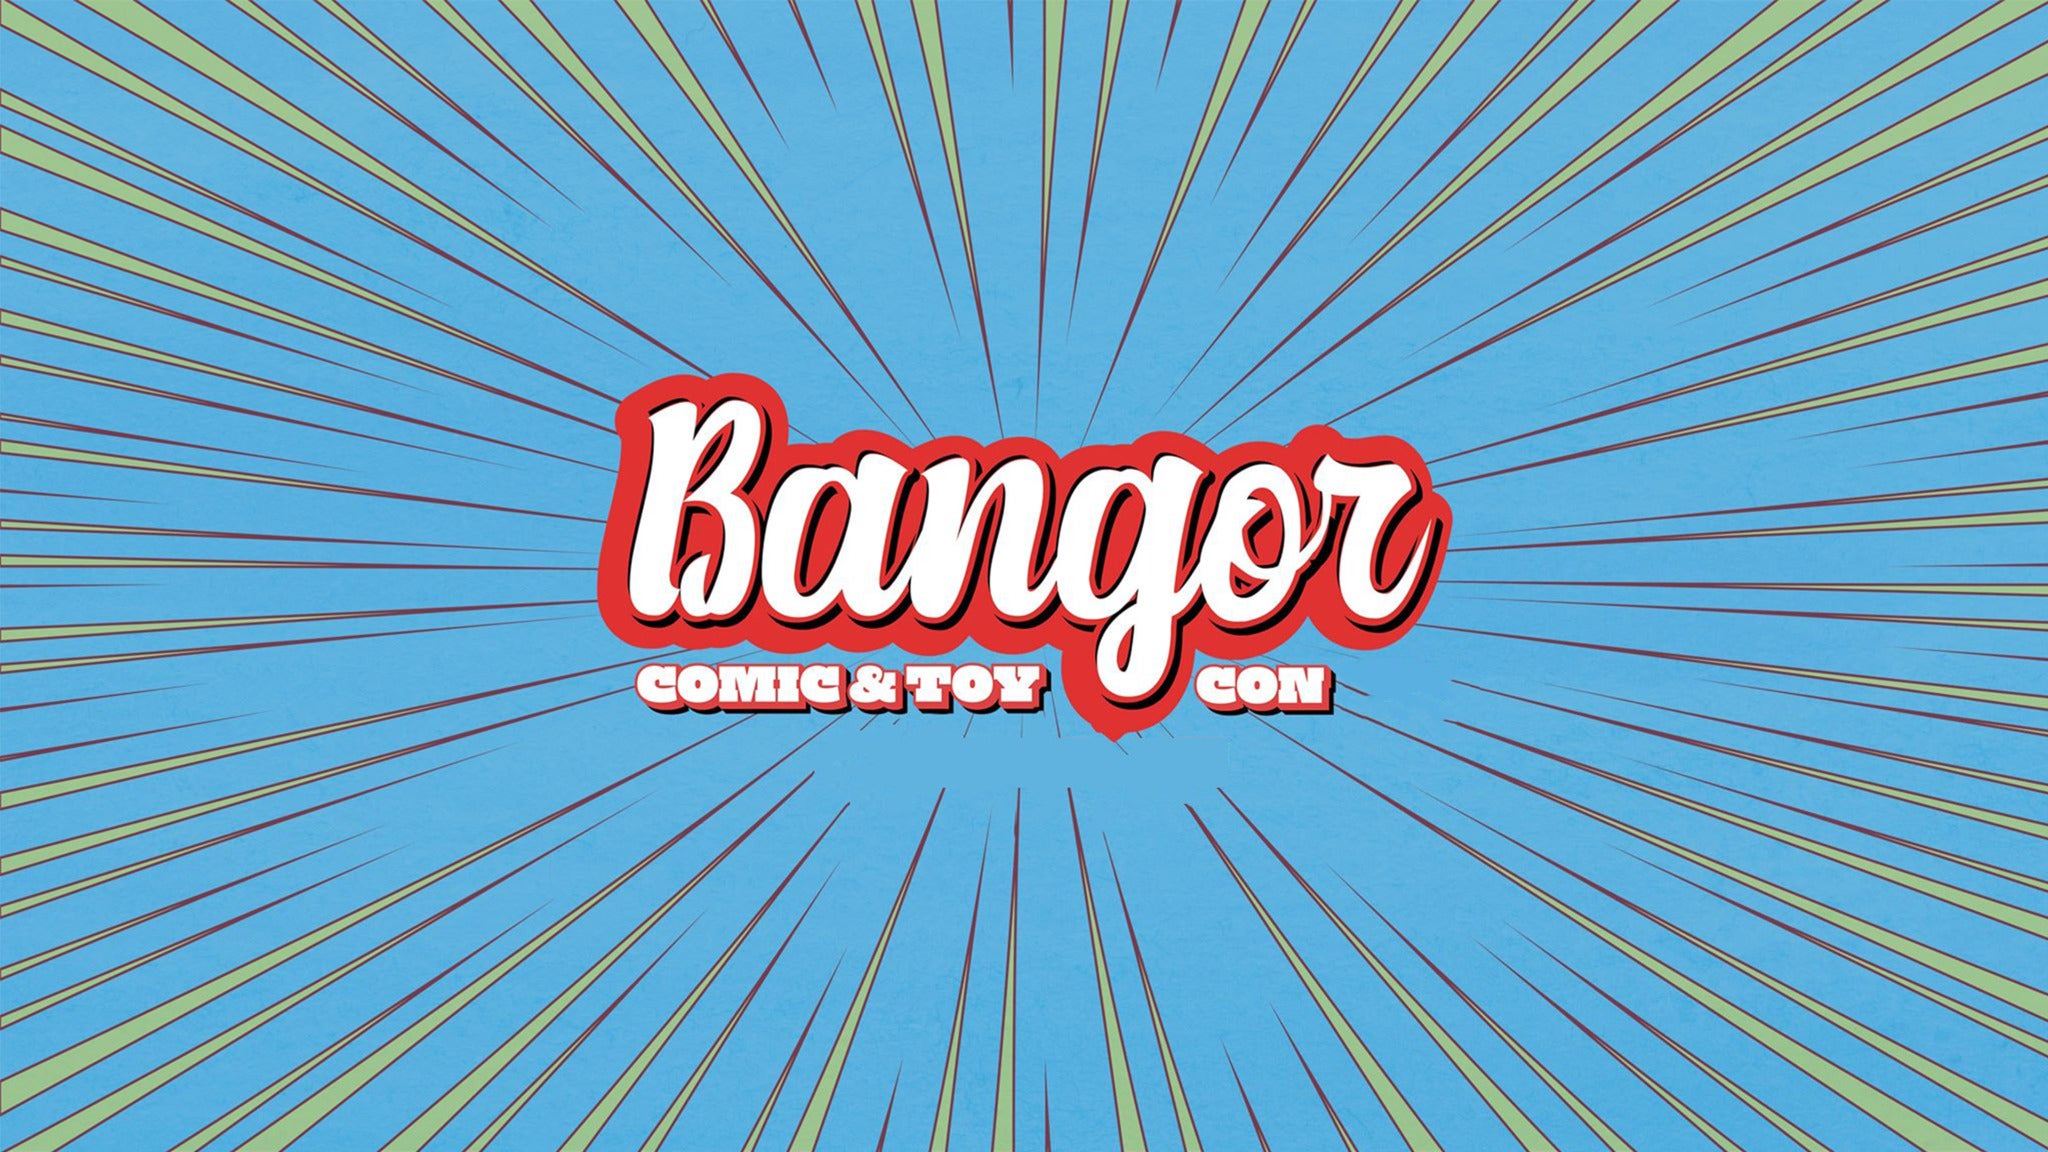 Bangor Comic and Toy Con - Saturday Single Day in Bangor promo photo for Venue presale offer code